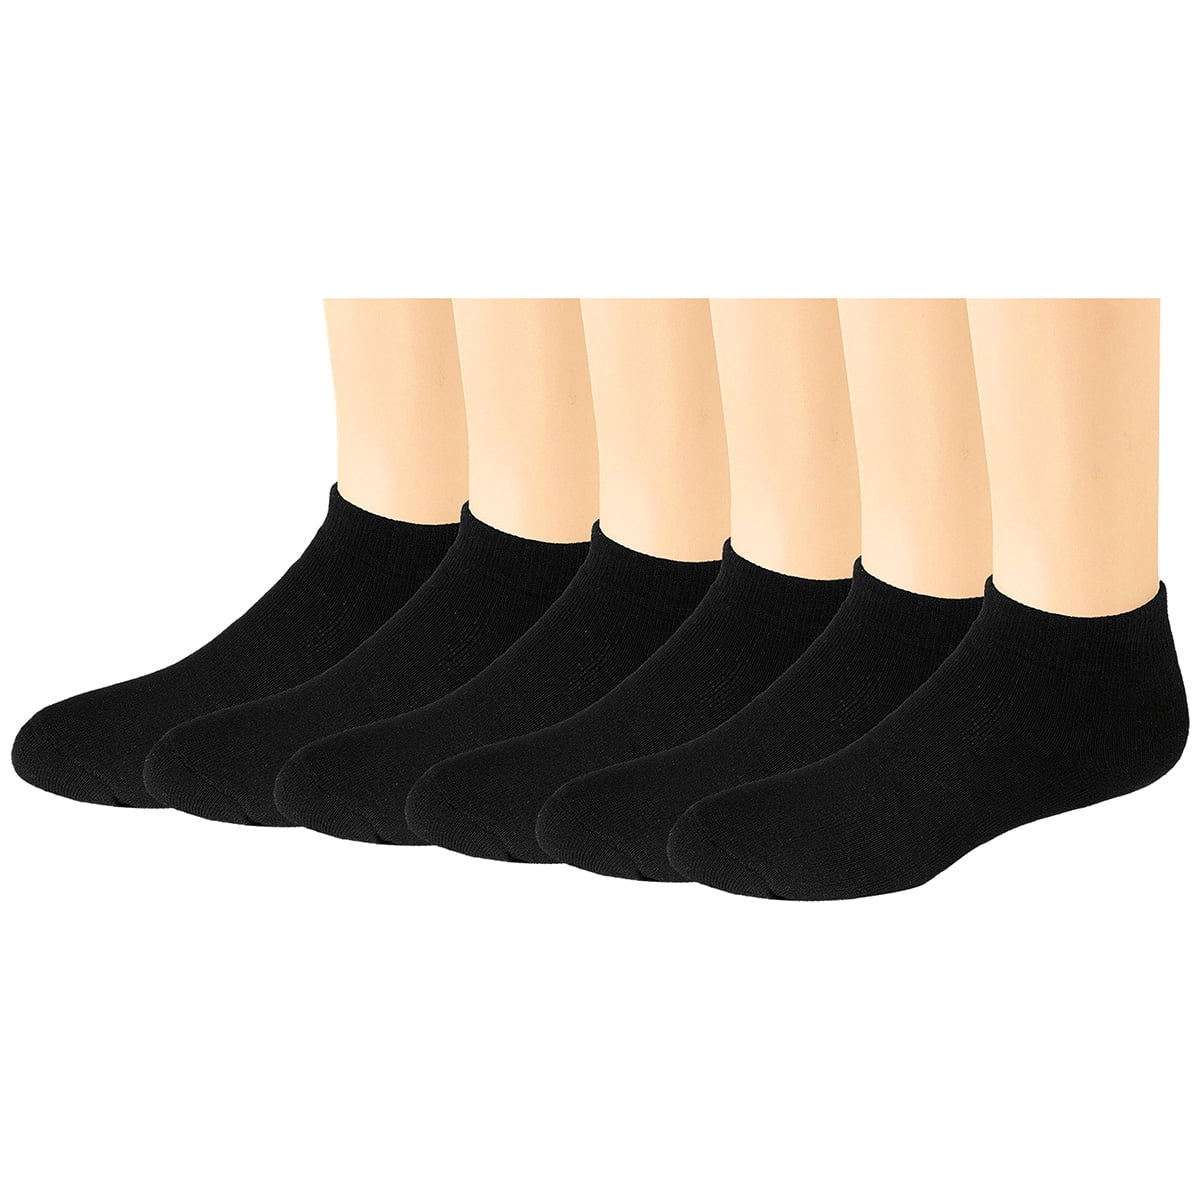 Falari Men's Ultimate Cushioned Cotton Ankle Socks 6 or 12 Pack ...